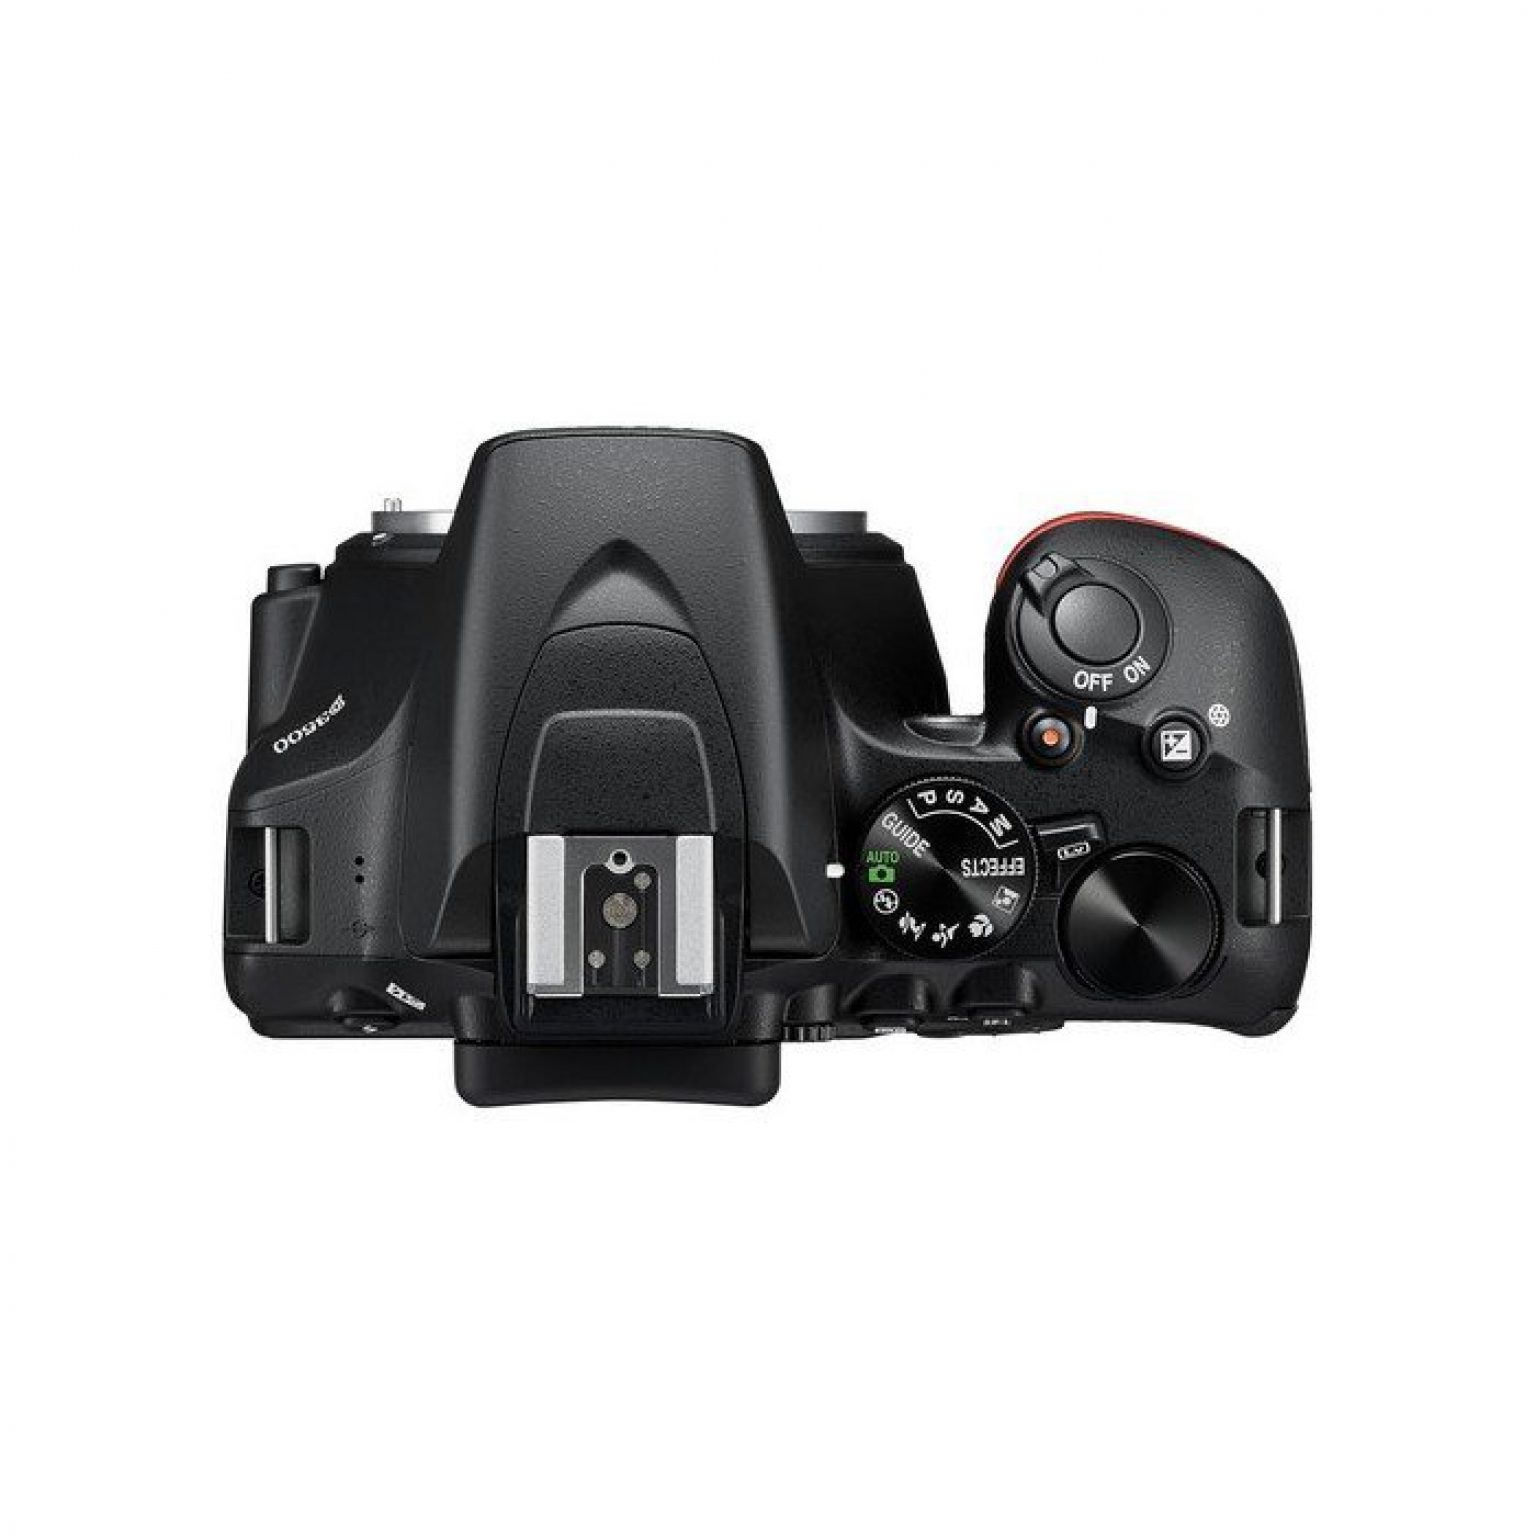 Nikon D3500 DSLR Camera with 18 55mm 5